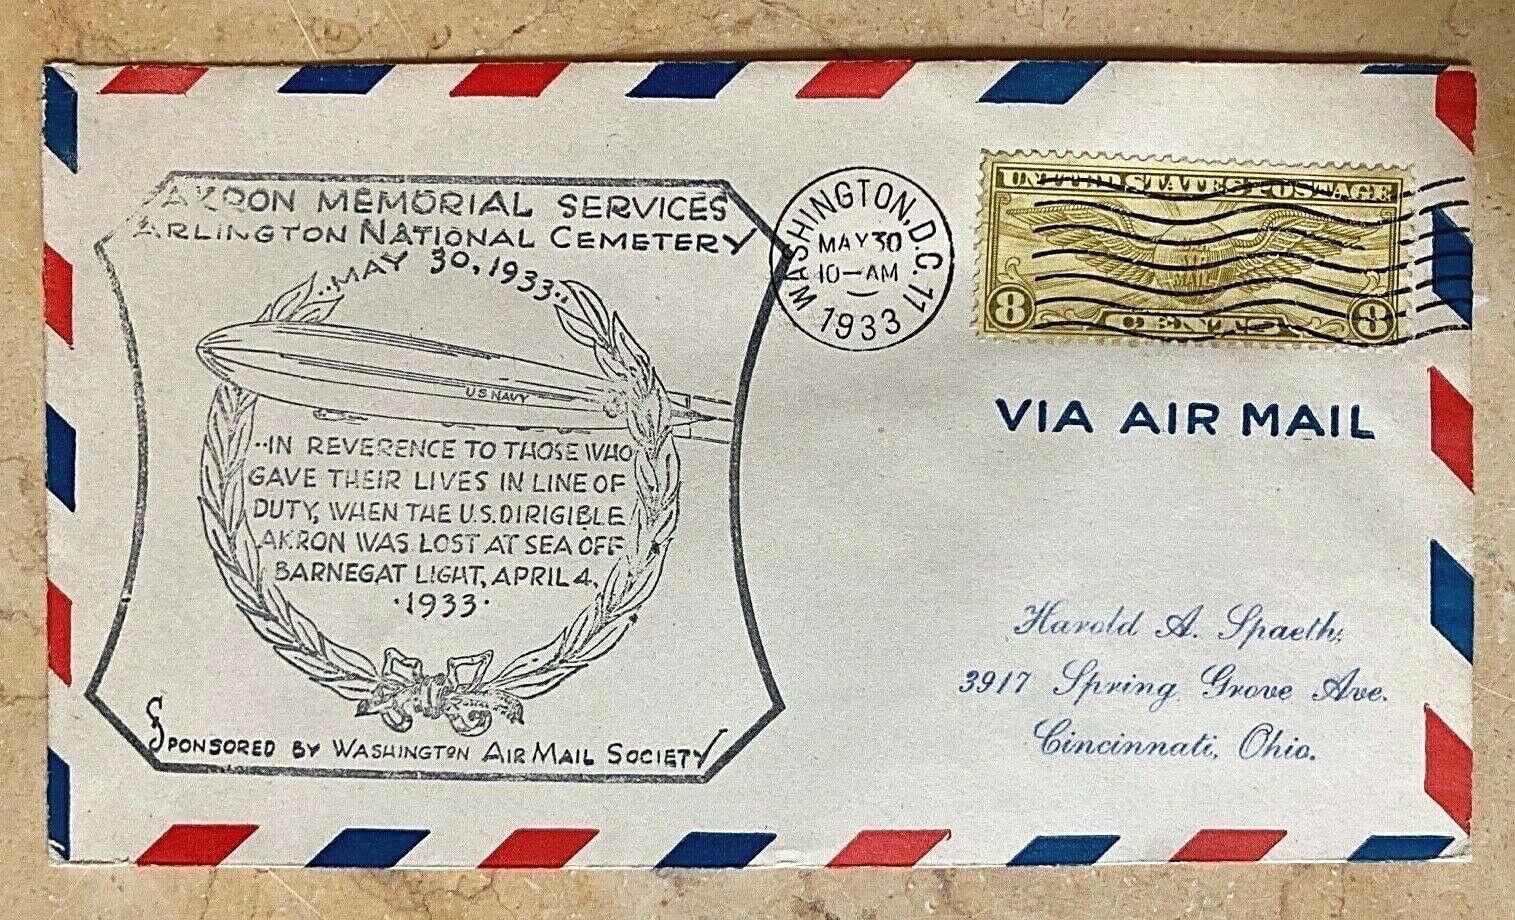 Us Airship Akron Memorial Service Arlington National Cemetery May 30,1933 Cover